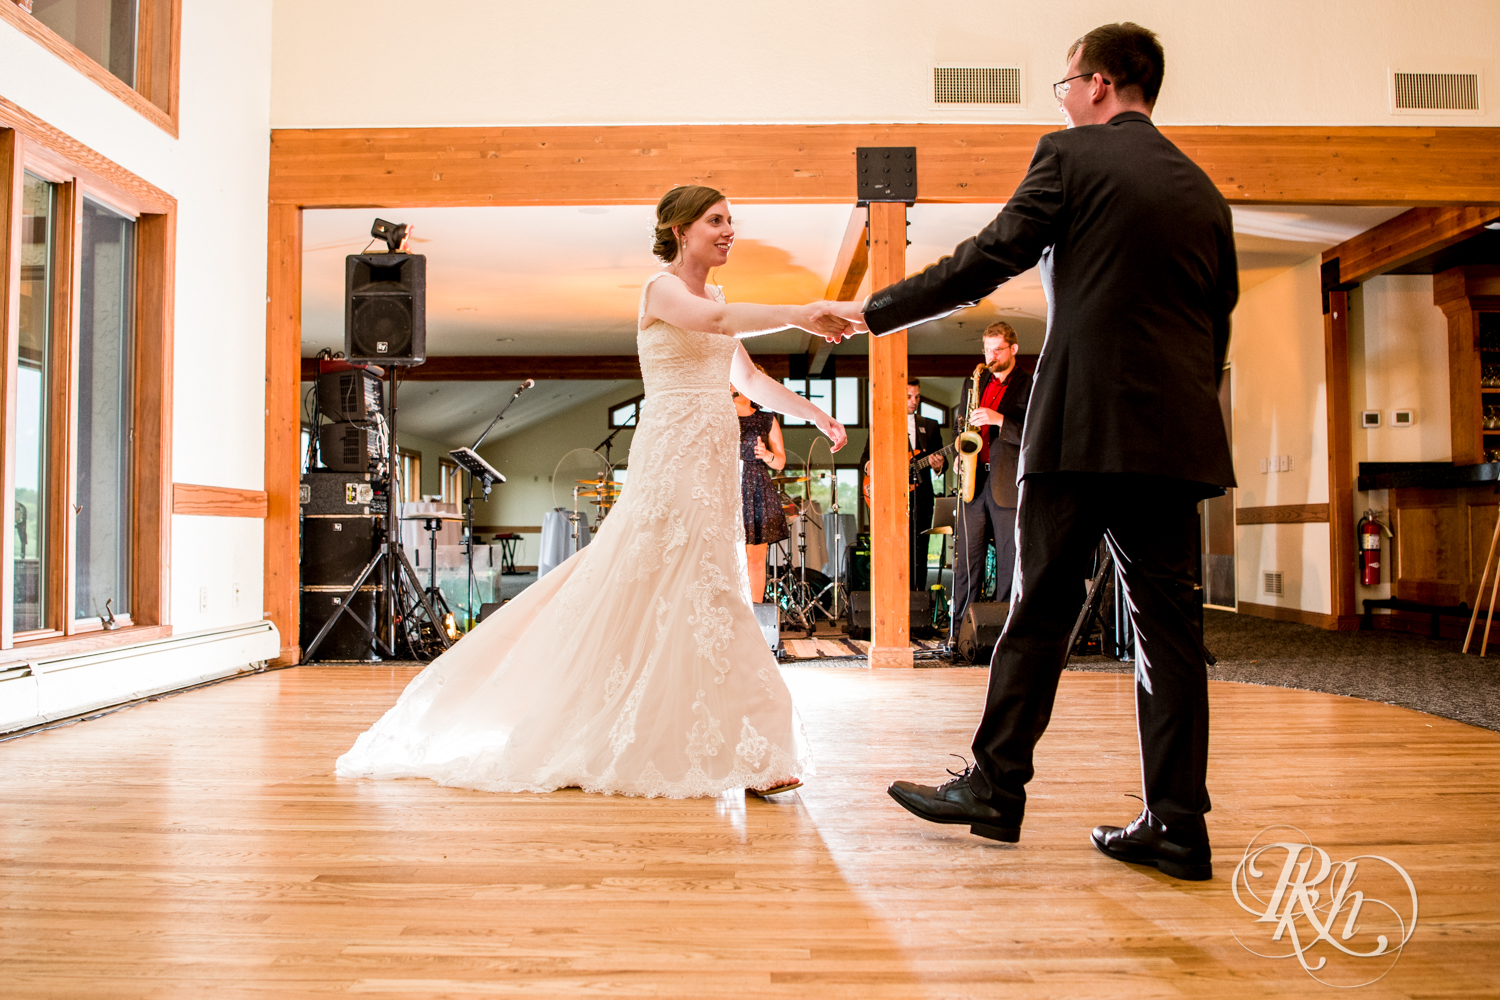 Bride and groom dance during wedding reception speeches at Oak Glen Golf Course in Stillwater, Minnesota.